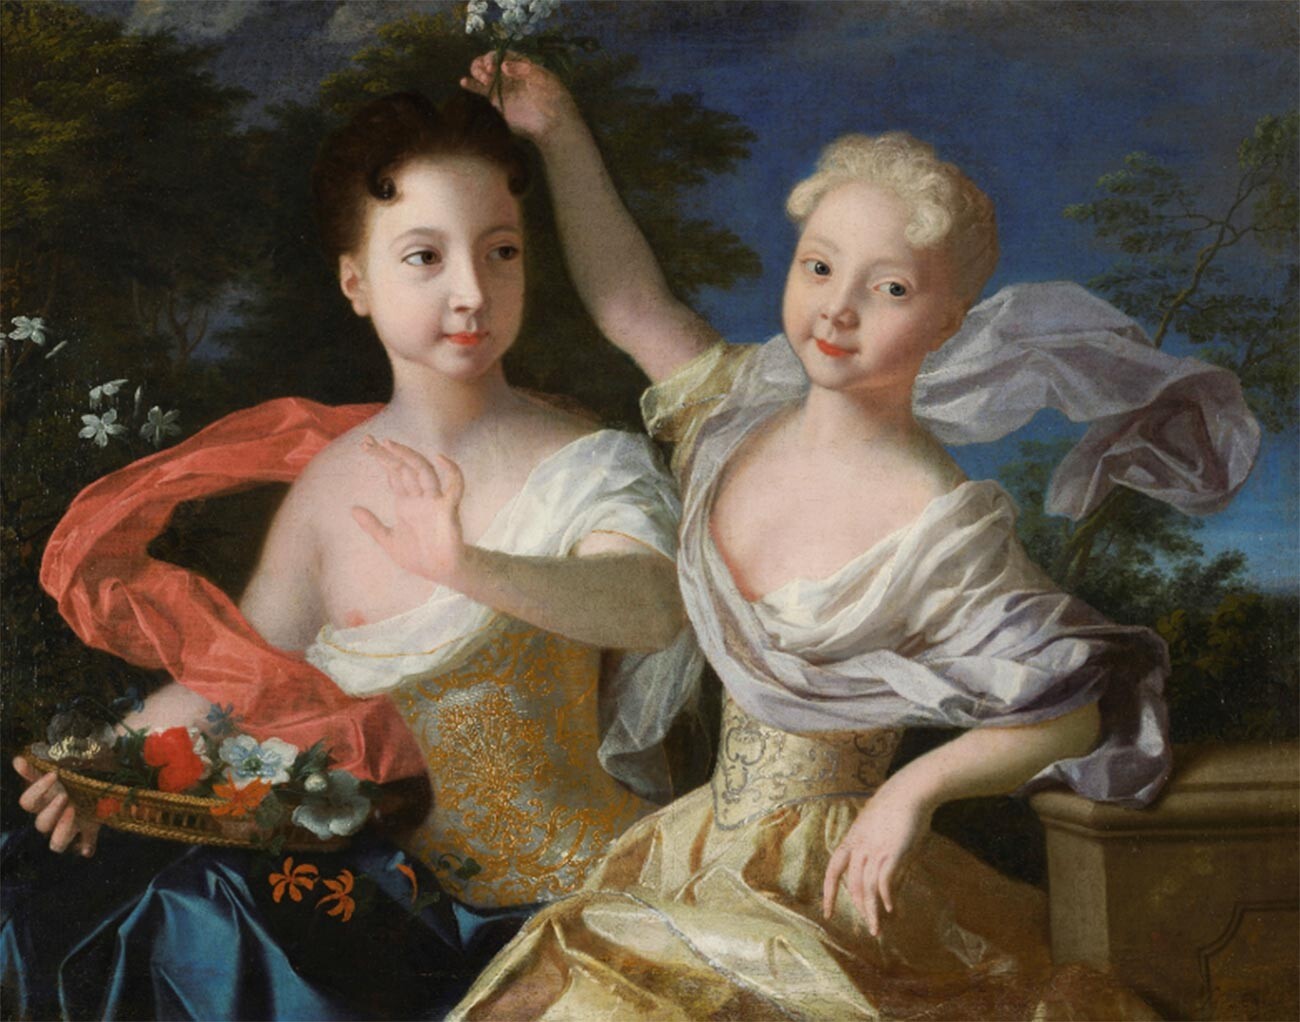 Anna Petrovna and Elizaveta Petrovna, daughters of Peter the Great, circa 1717